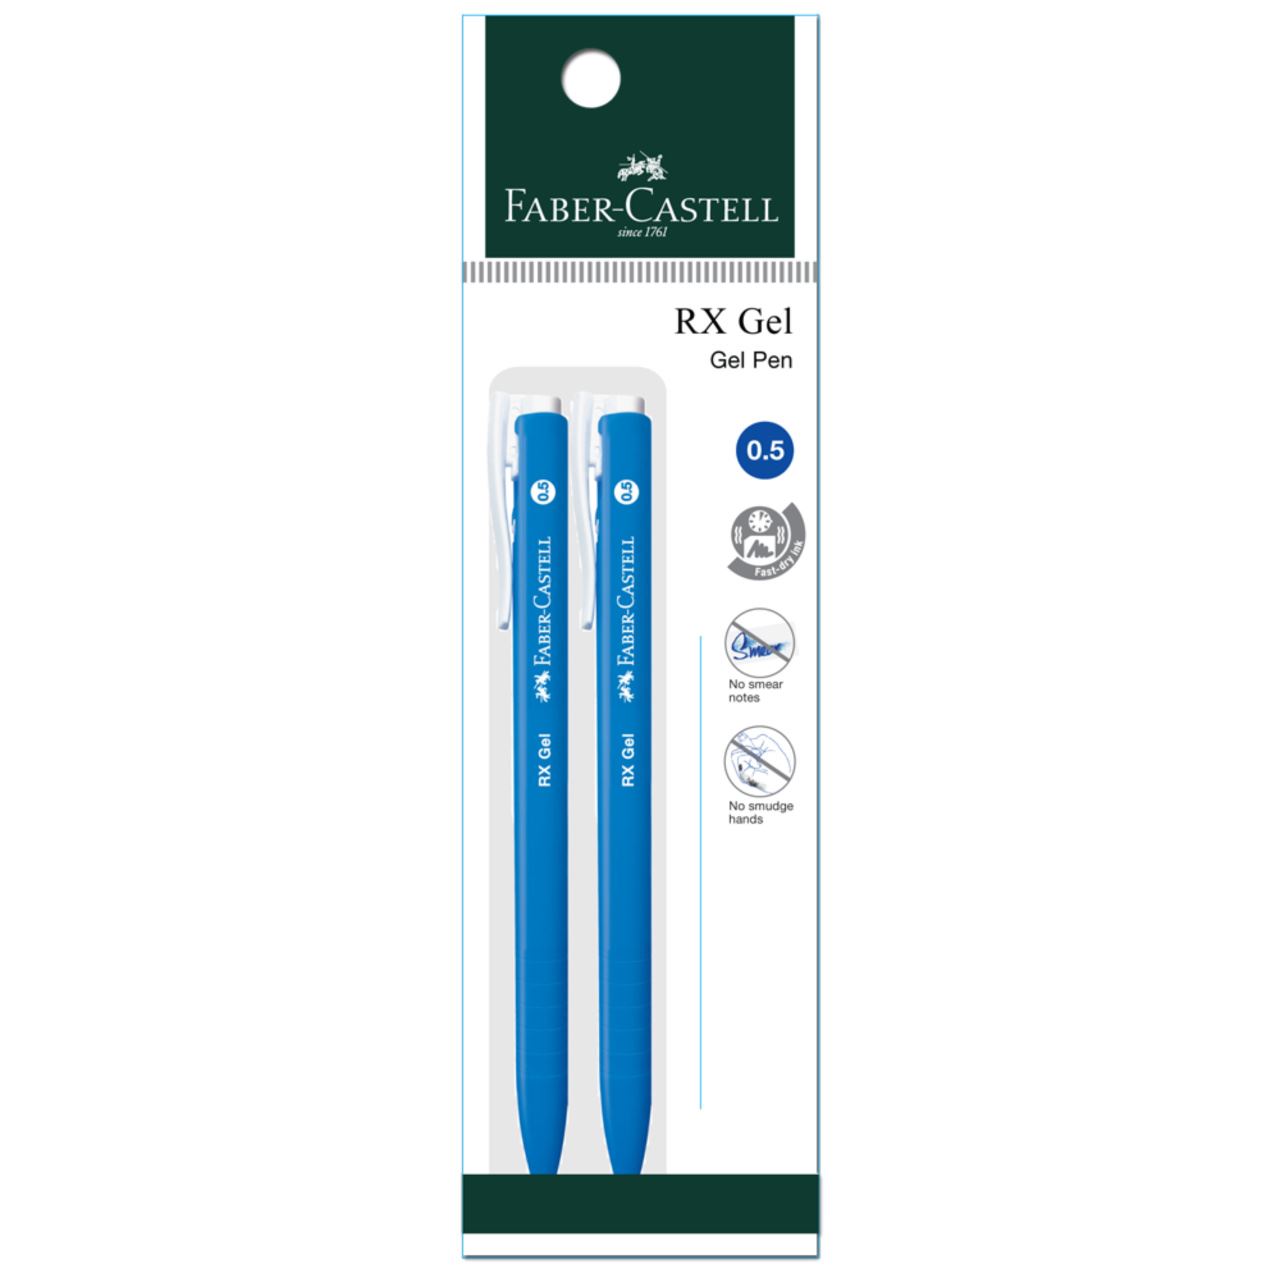 Faber-Castell - Gel pen RX Gel, 0.5mm, blue, blistercard of 2